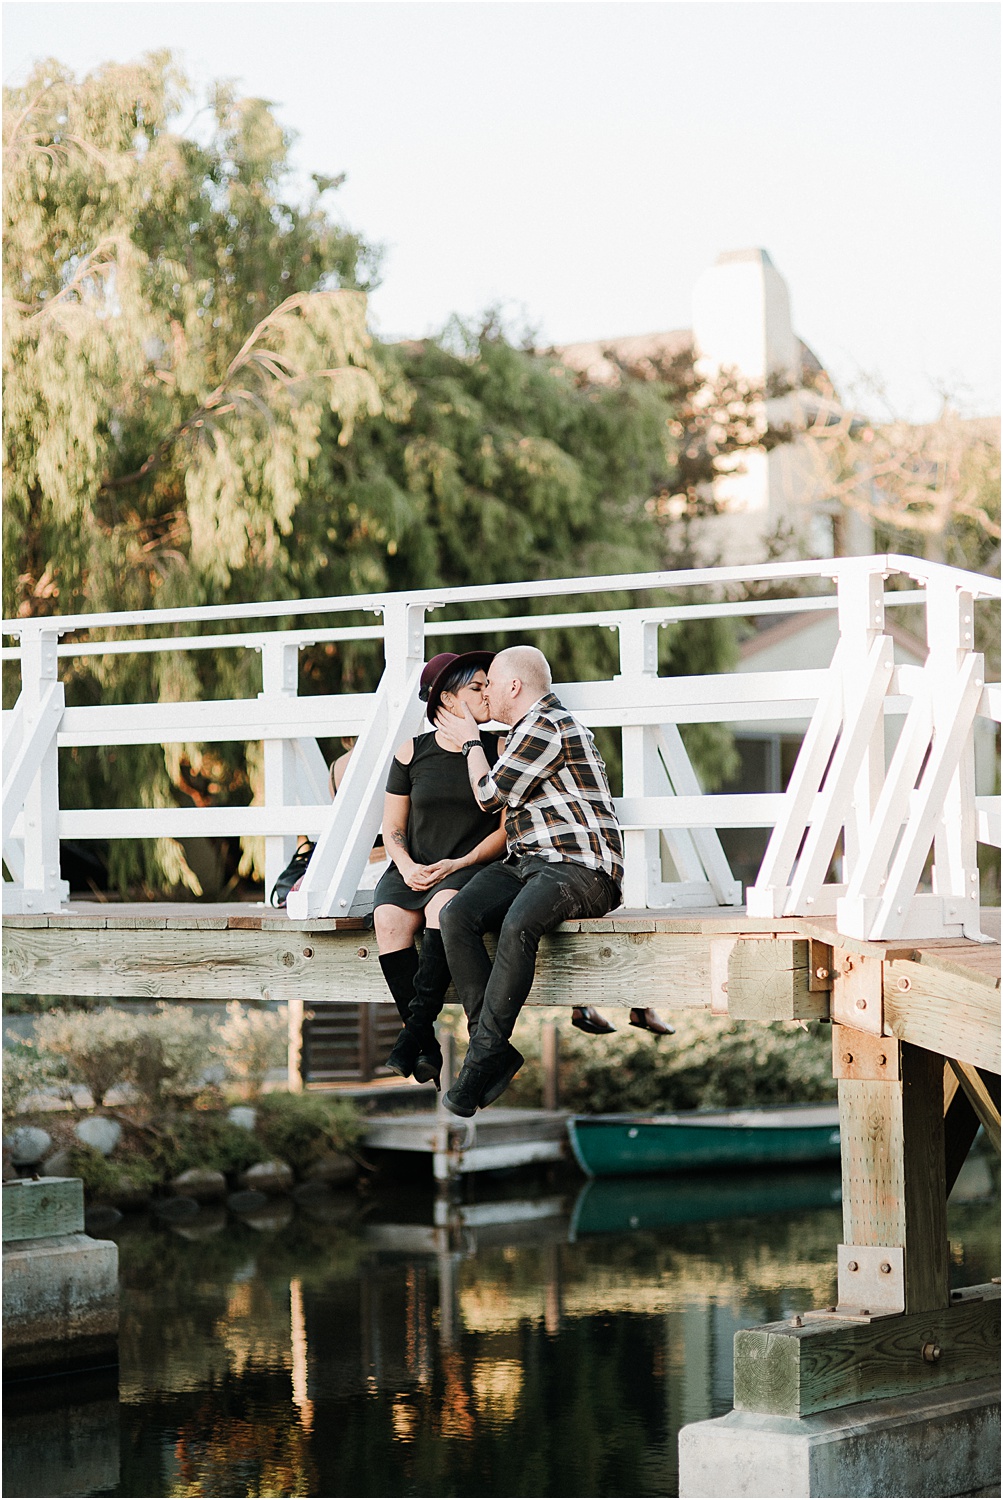 Nicole and Gareth_Venice Canals_Los Angeles Wedding Photographer0038.jpg